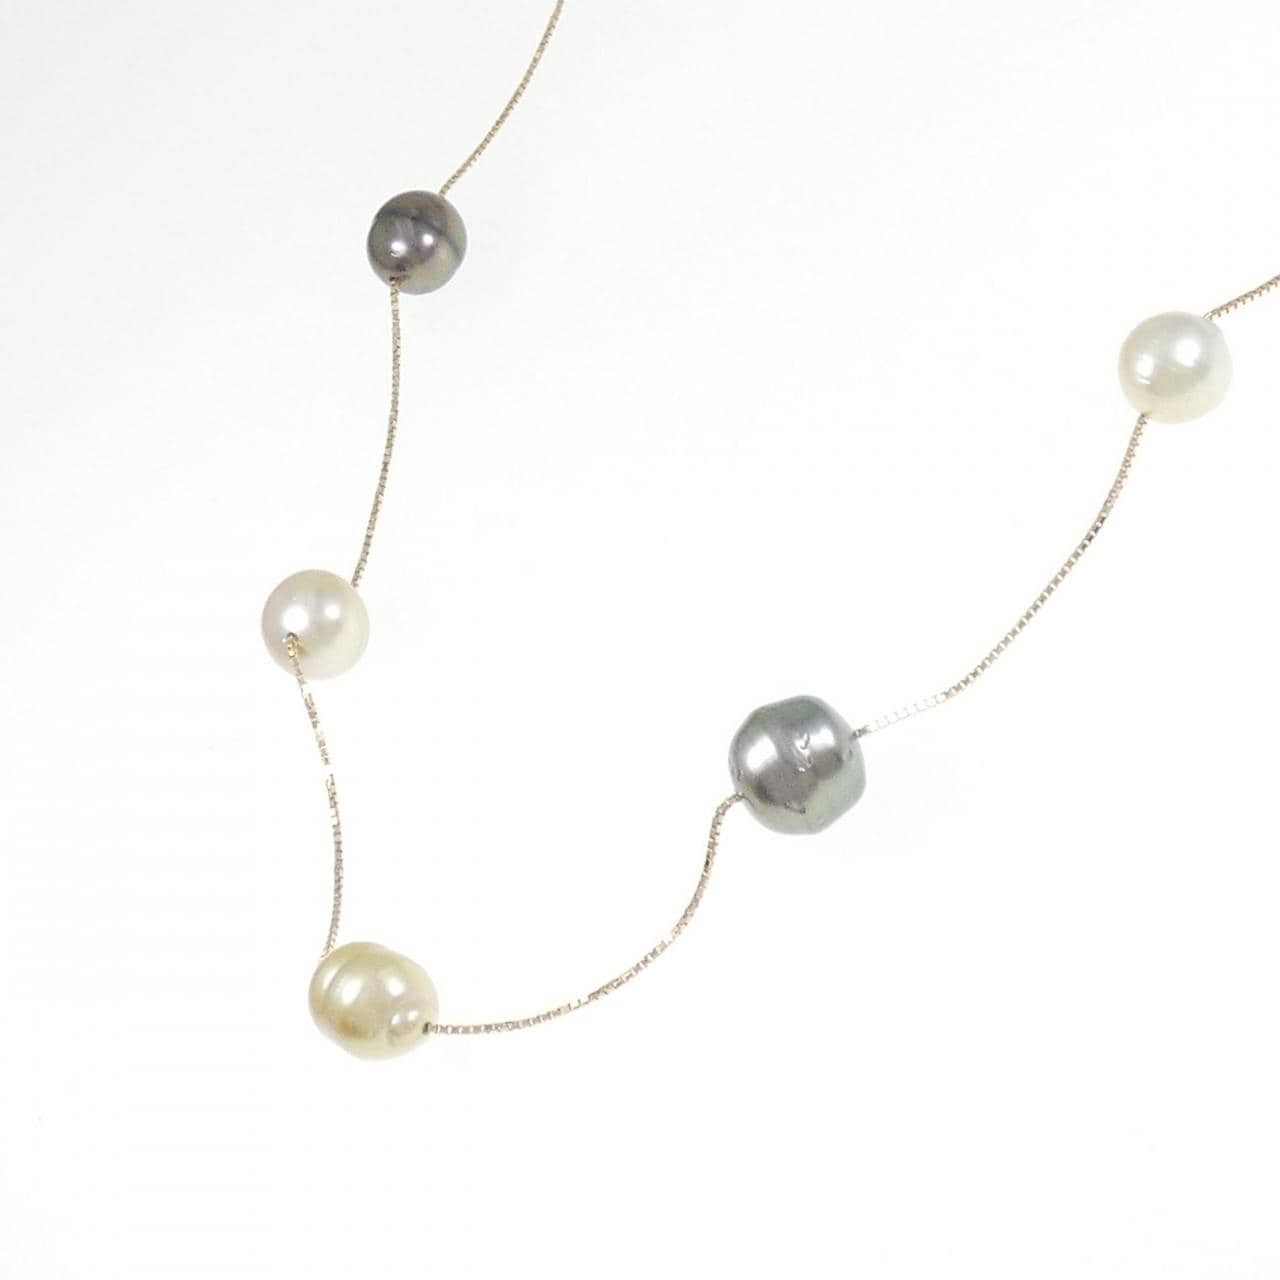 Tasaki pearl necklace